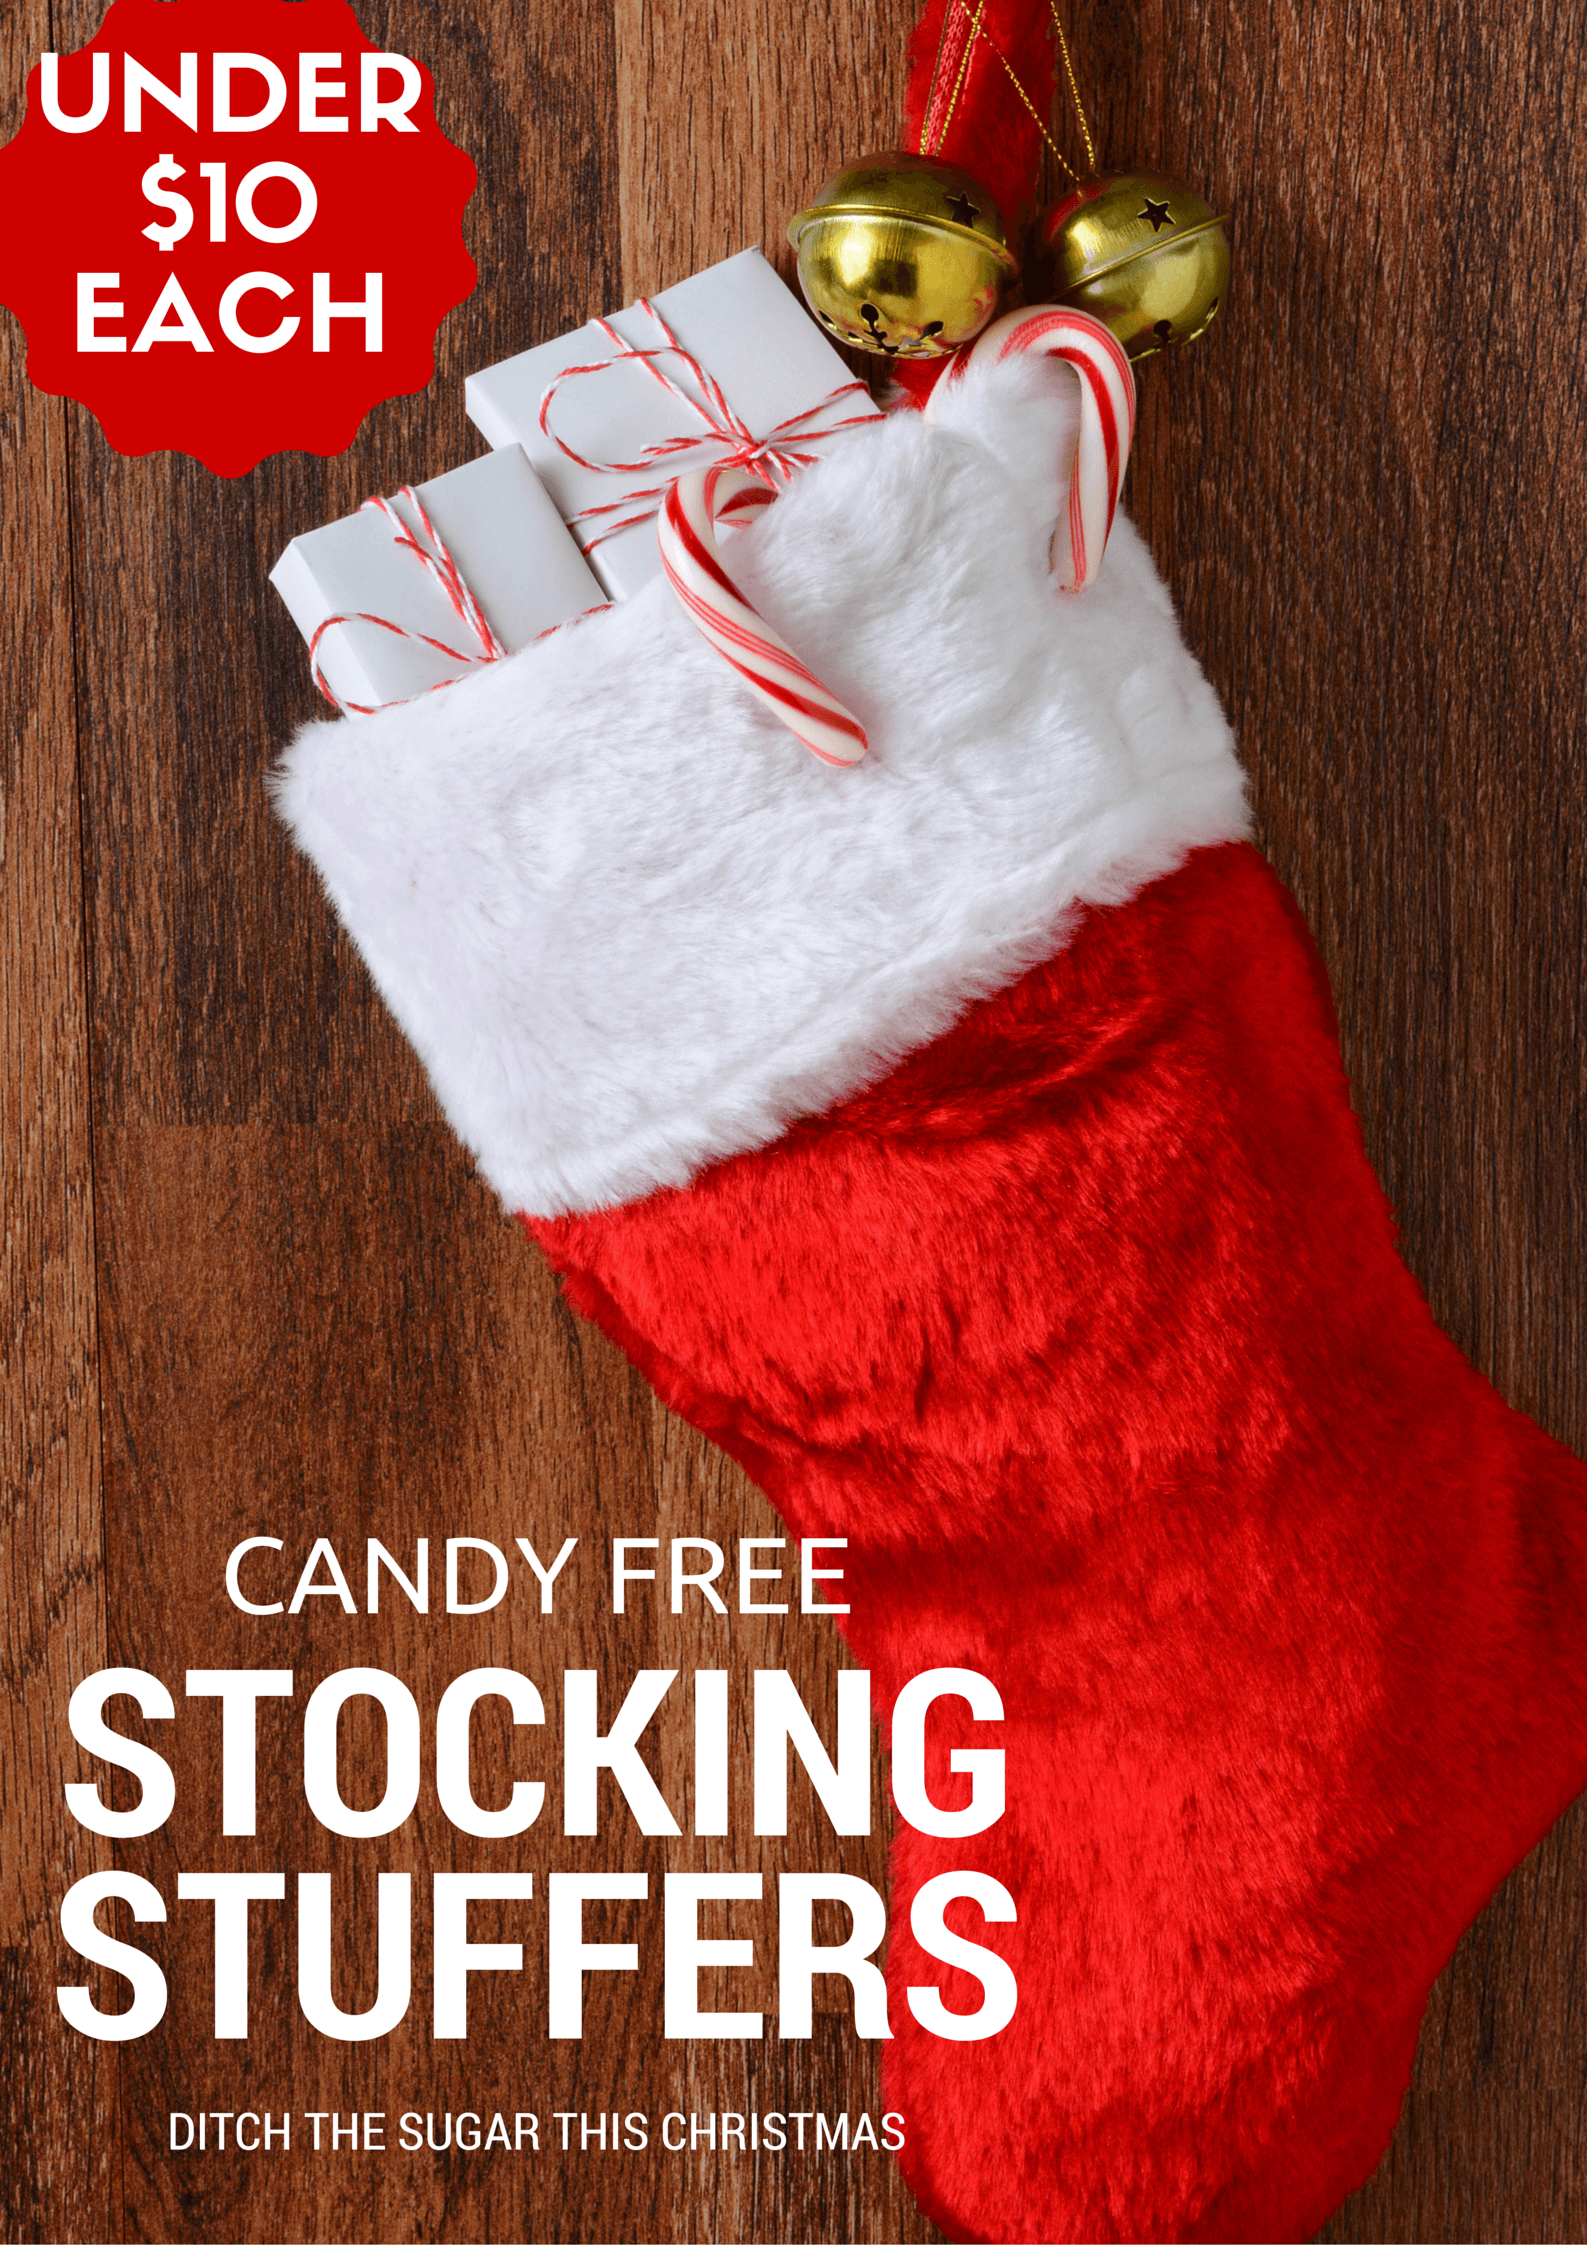 Candy Free Stocking Stuffer Ideas